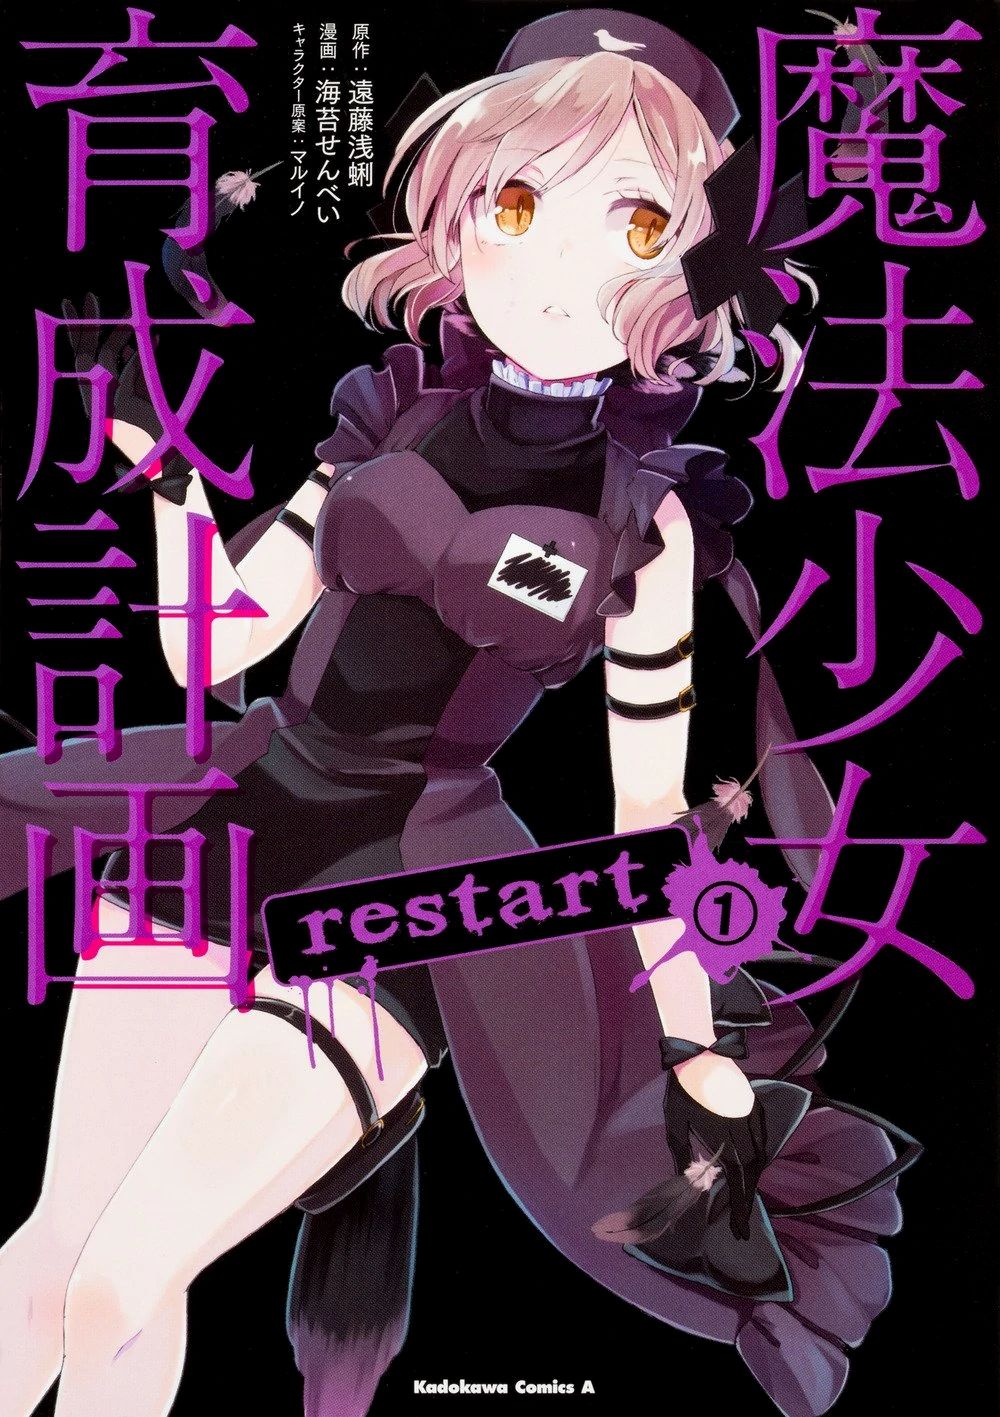 Magical Girl Raising Project Restart manga cover